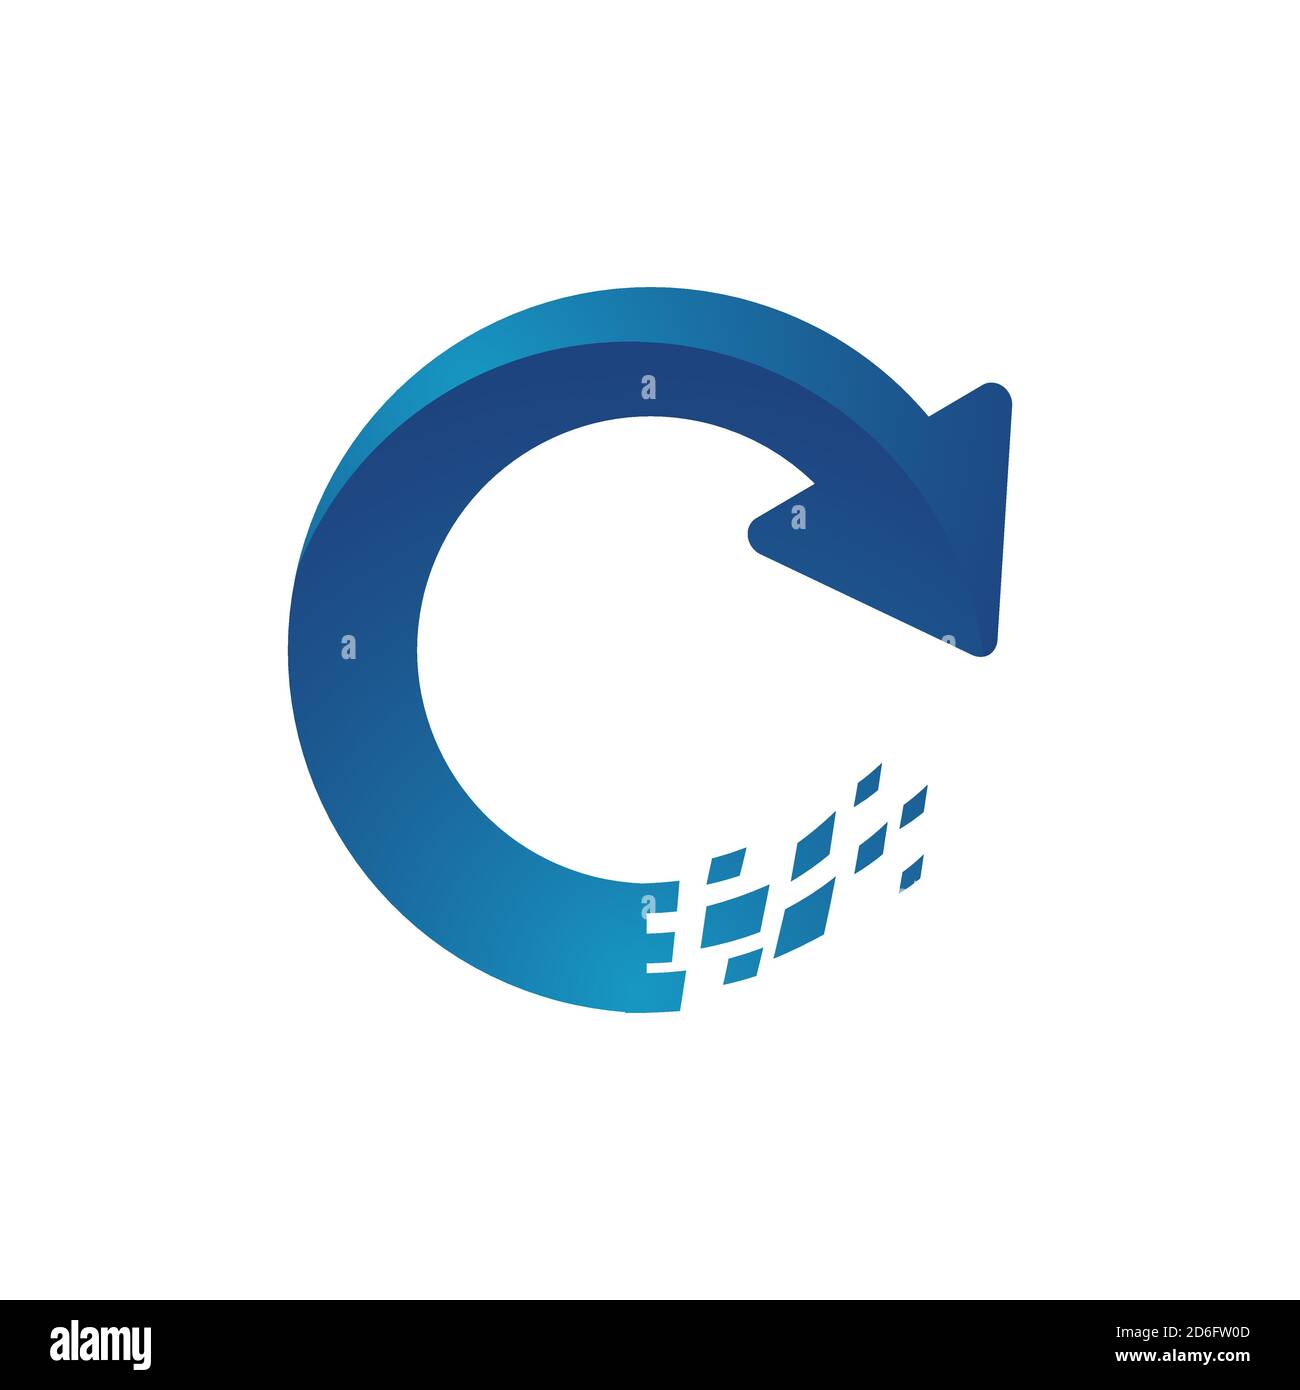 reload logo design vector stylish loading icon circular Arrow Symbol  illustrations Stock Vector